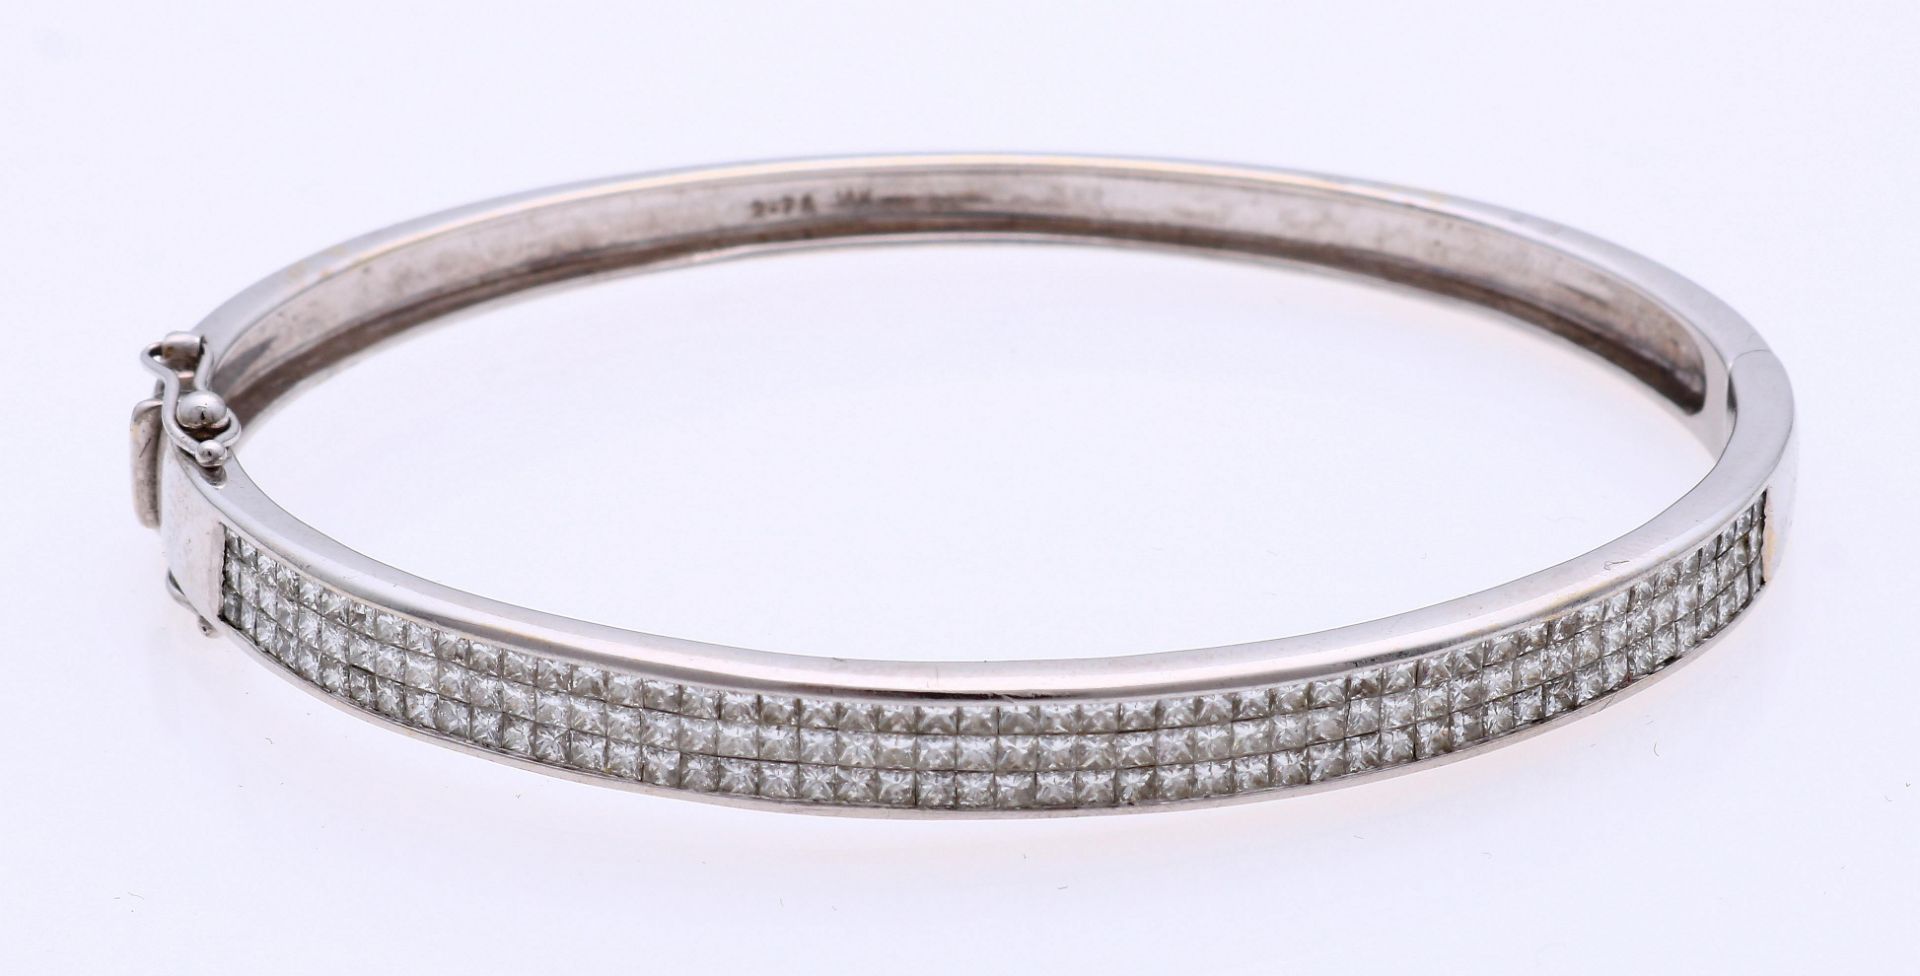 Slave bracelet with diamond